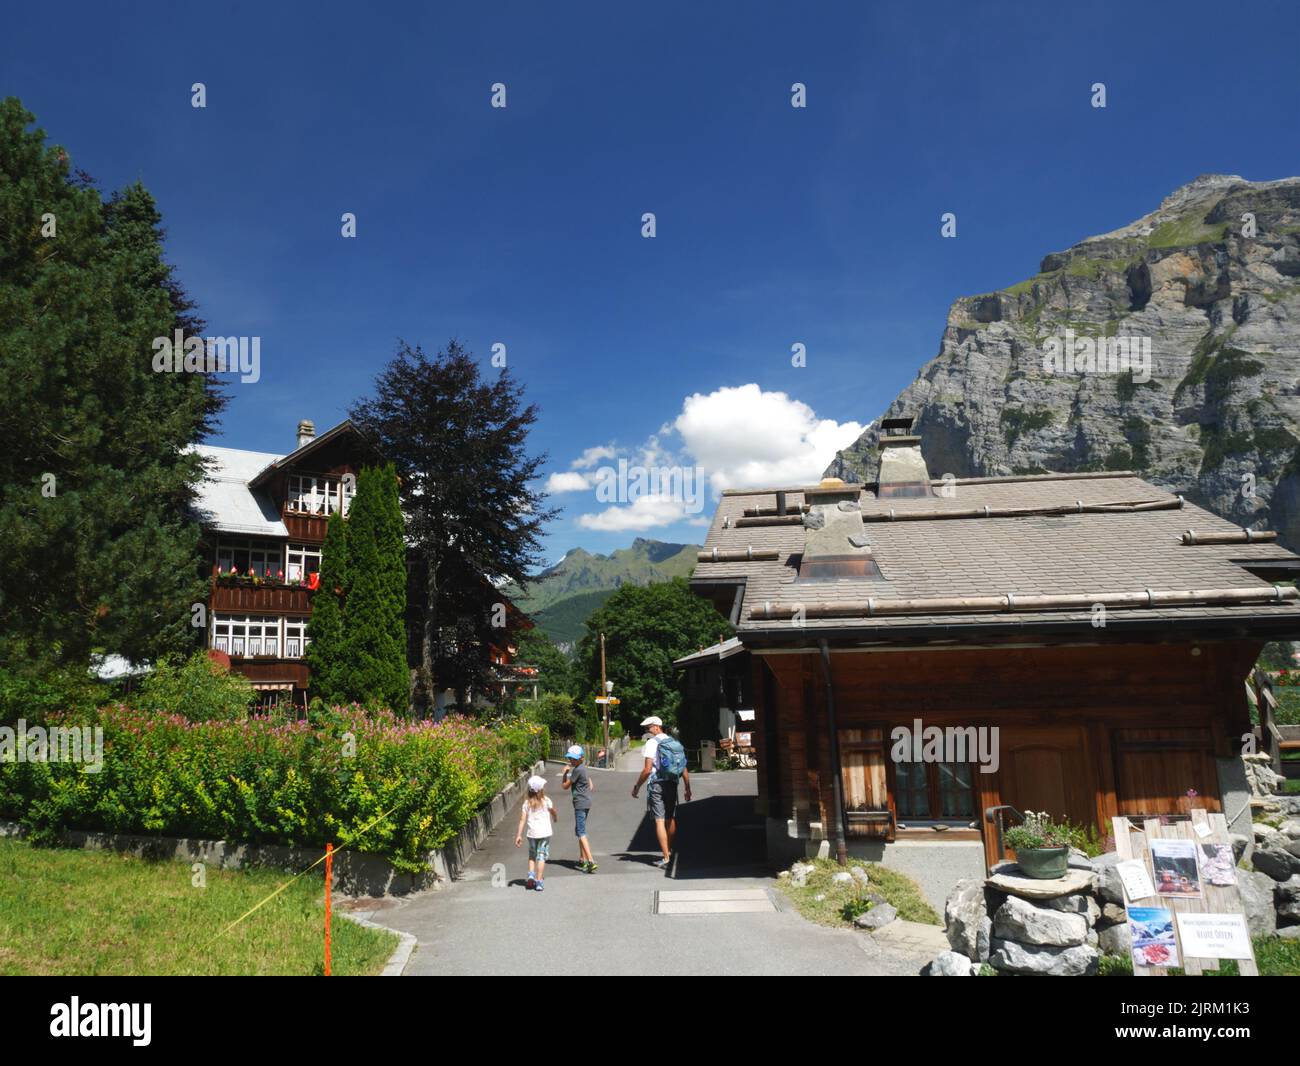 A street in the village of Gimmelwald, Murren, Bernese Oberland, Switzerland. Stock Photo